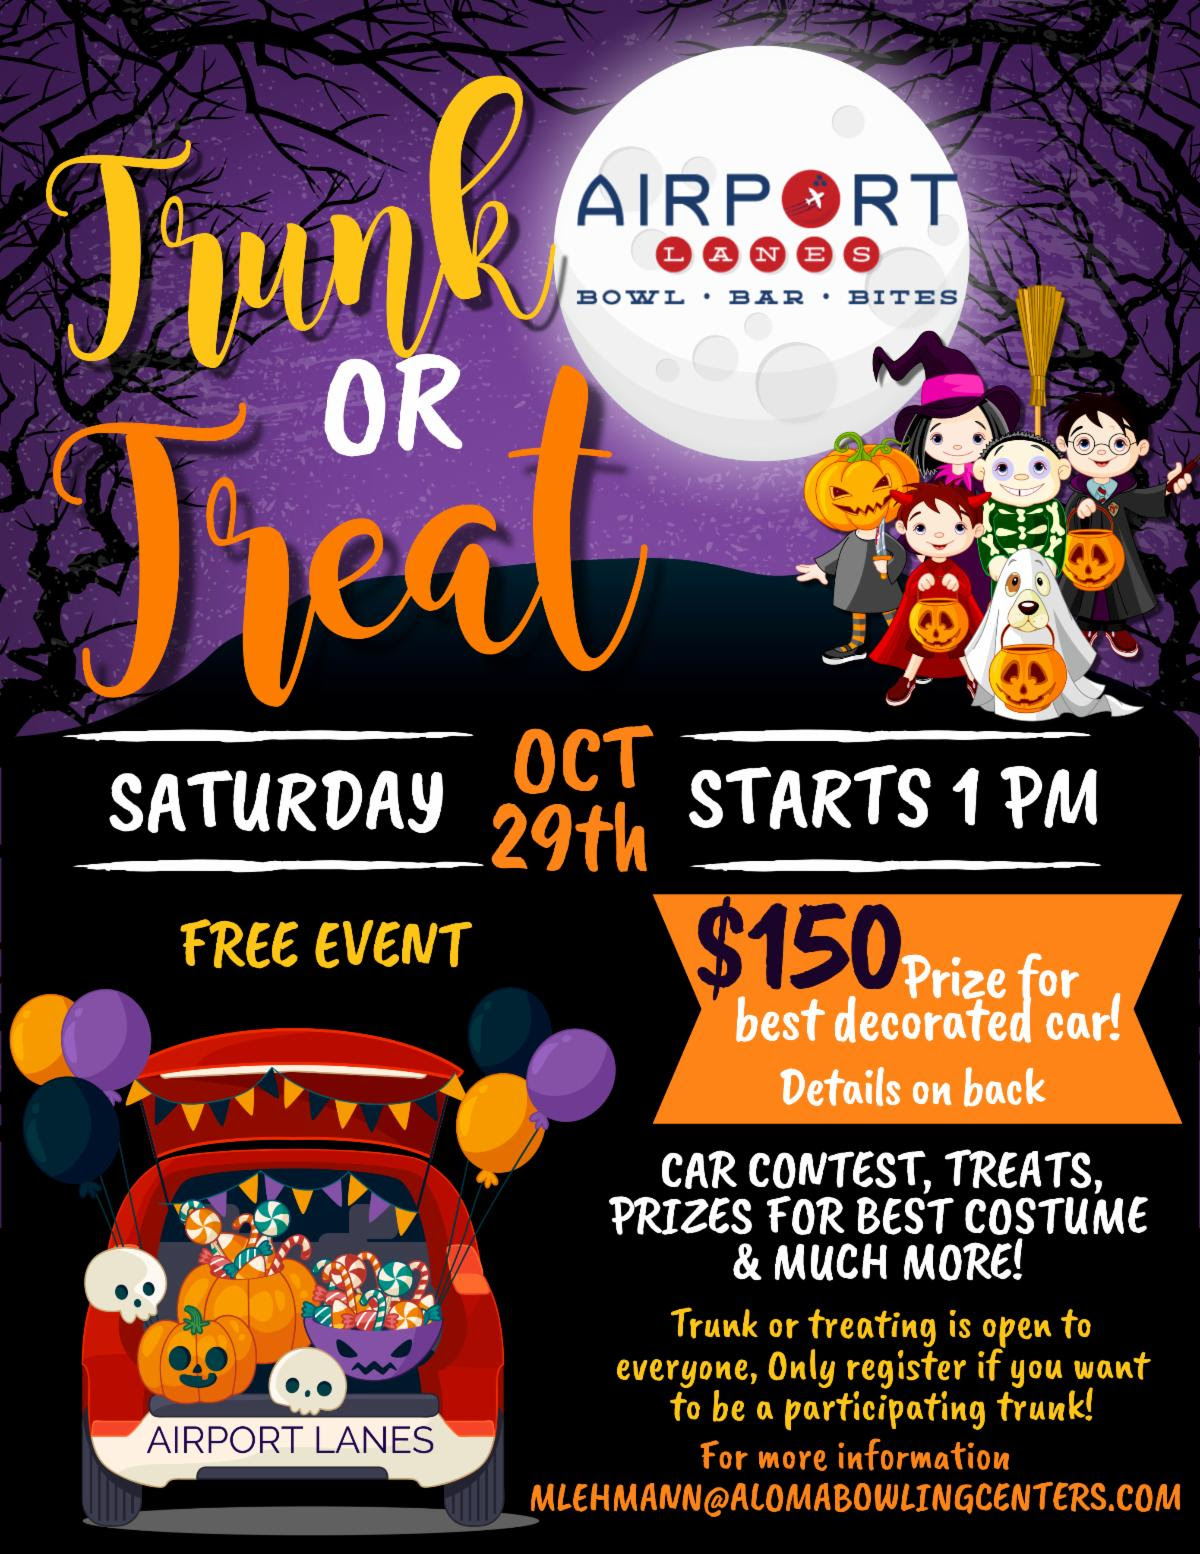 Airport Lanes to host Halloween TrunkorTreat Sanford Herald